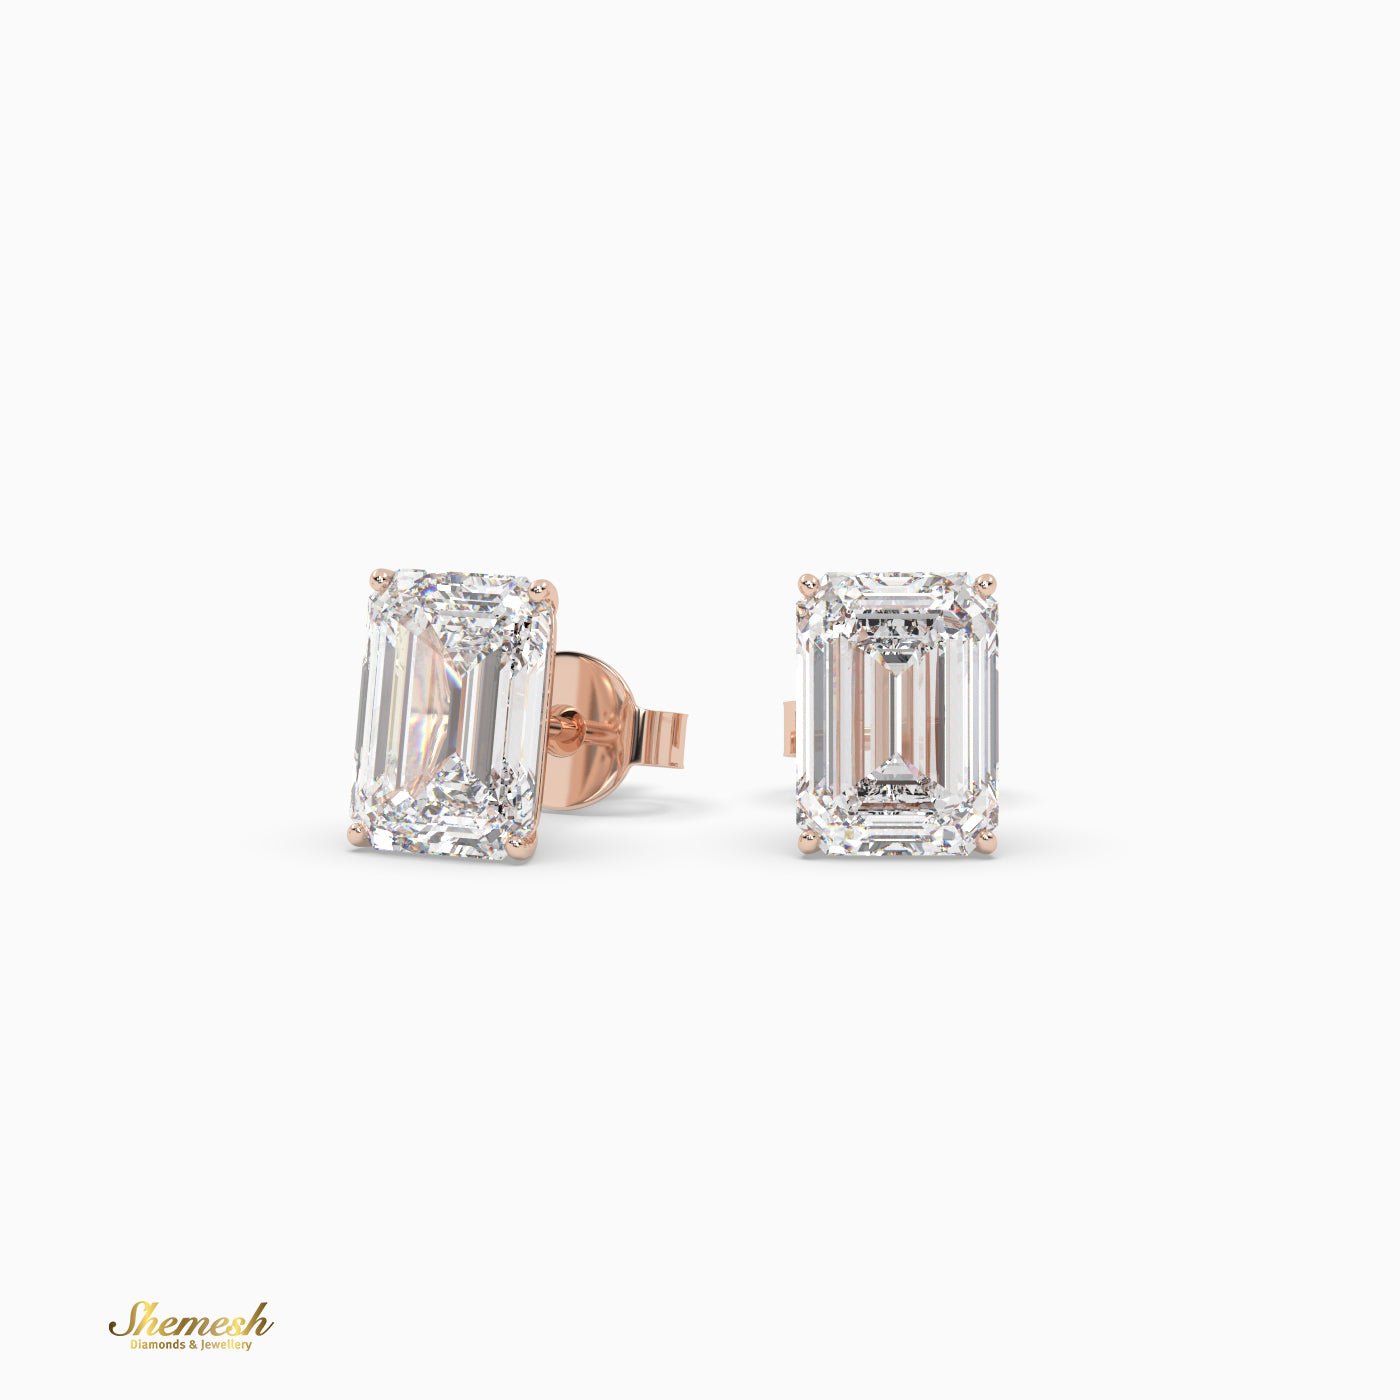 Emerald Cut 4 prongs Diamond Stud Earrings - shemesh_diamonds